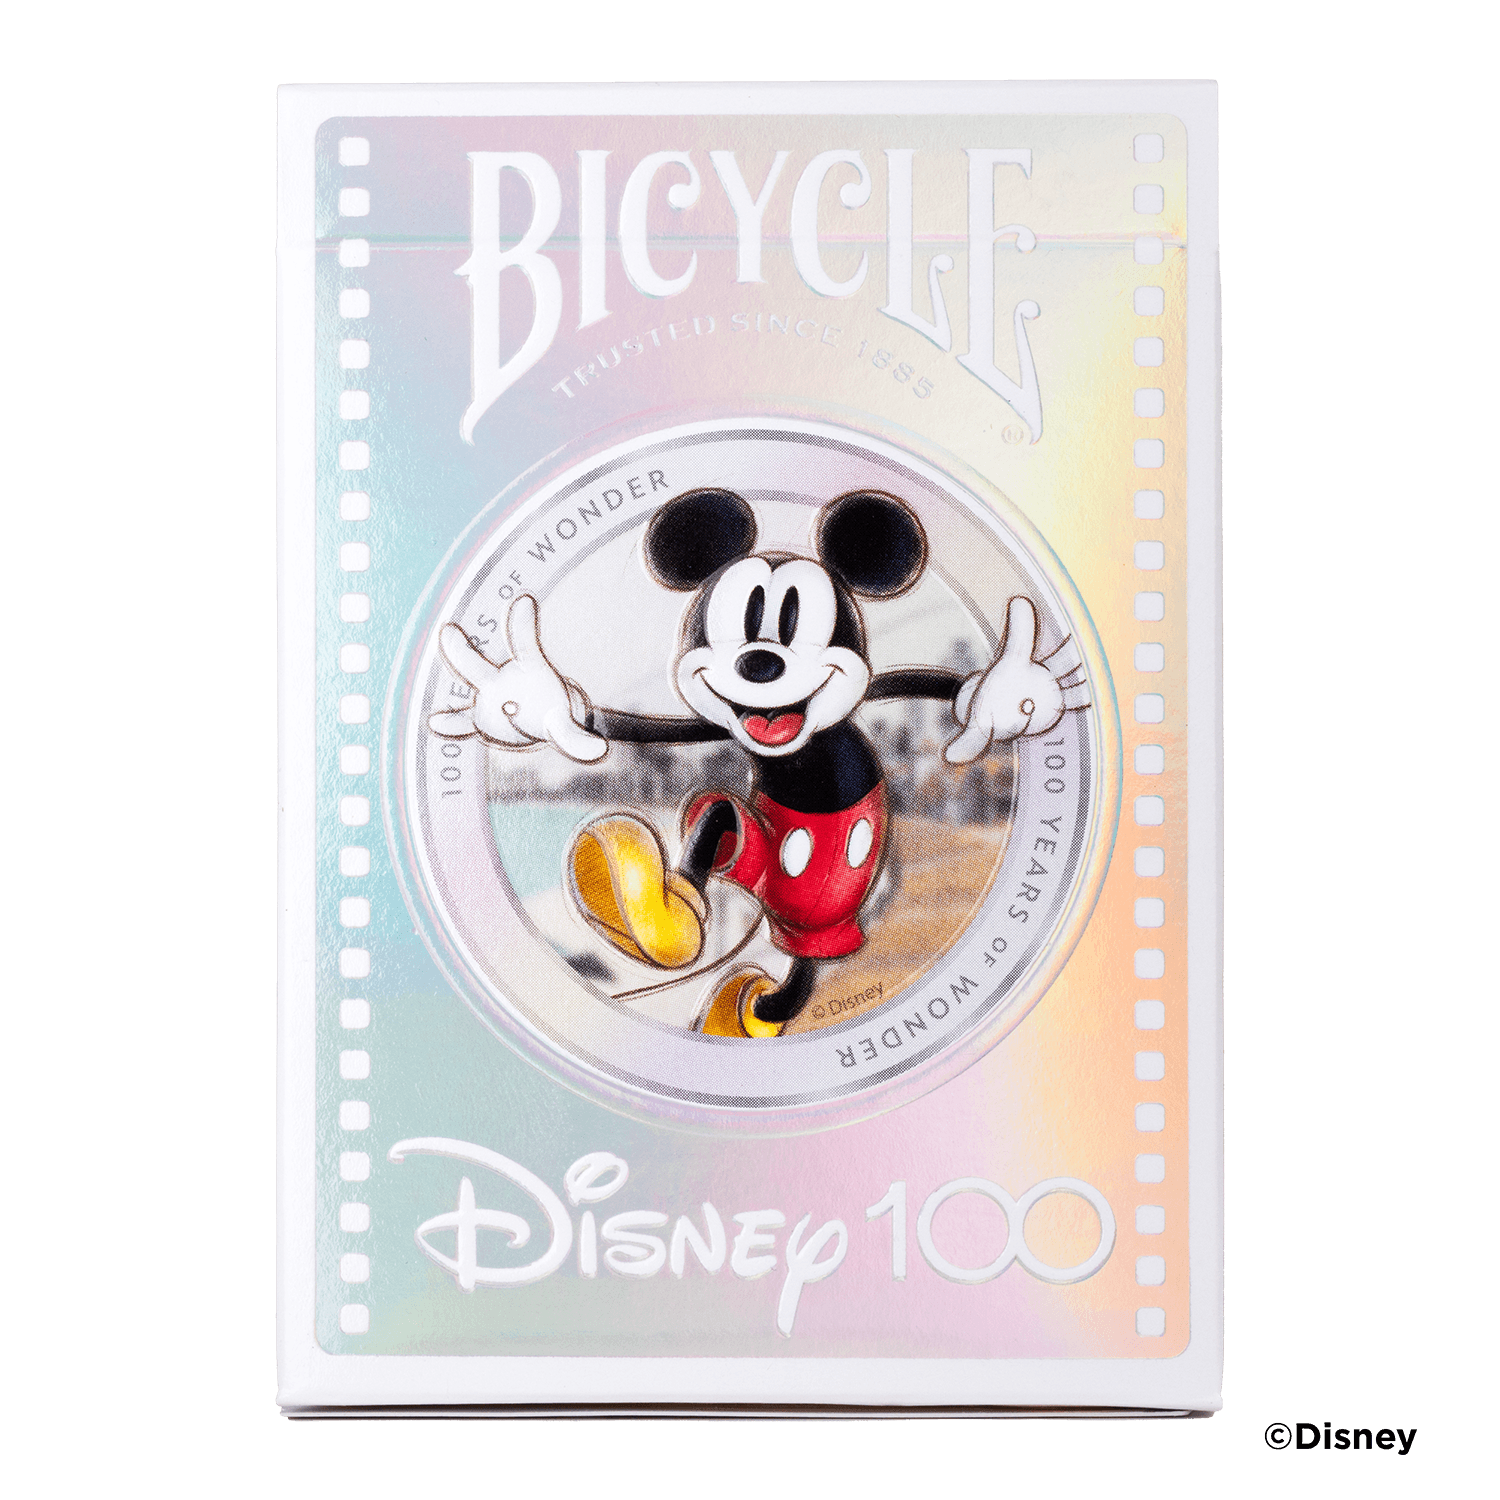 Bicycle Disney 100 Playing Ca